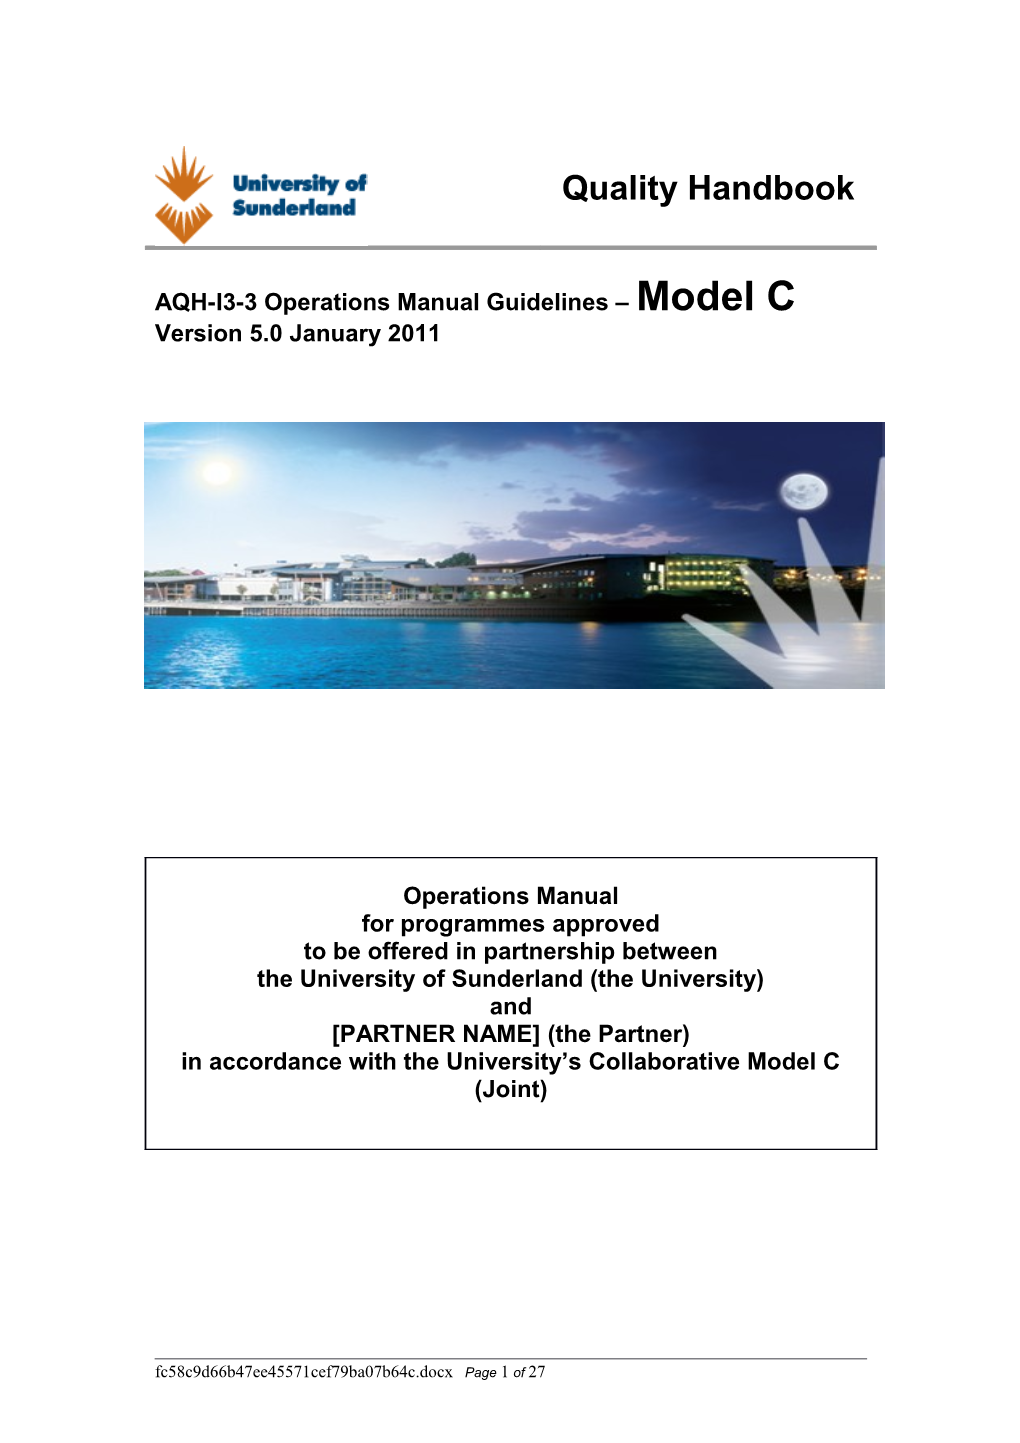 AQH-I3-3 Operations Manual Guidelines Model C